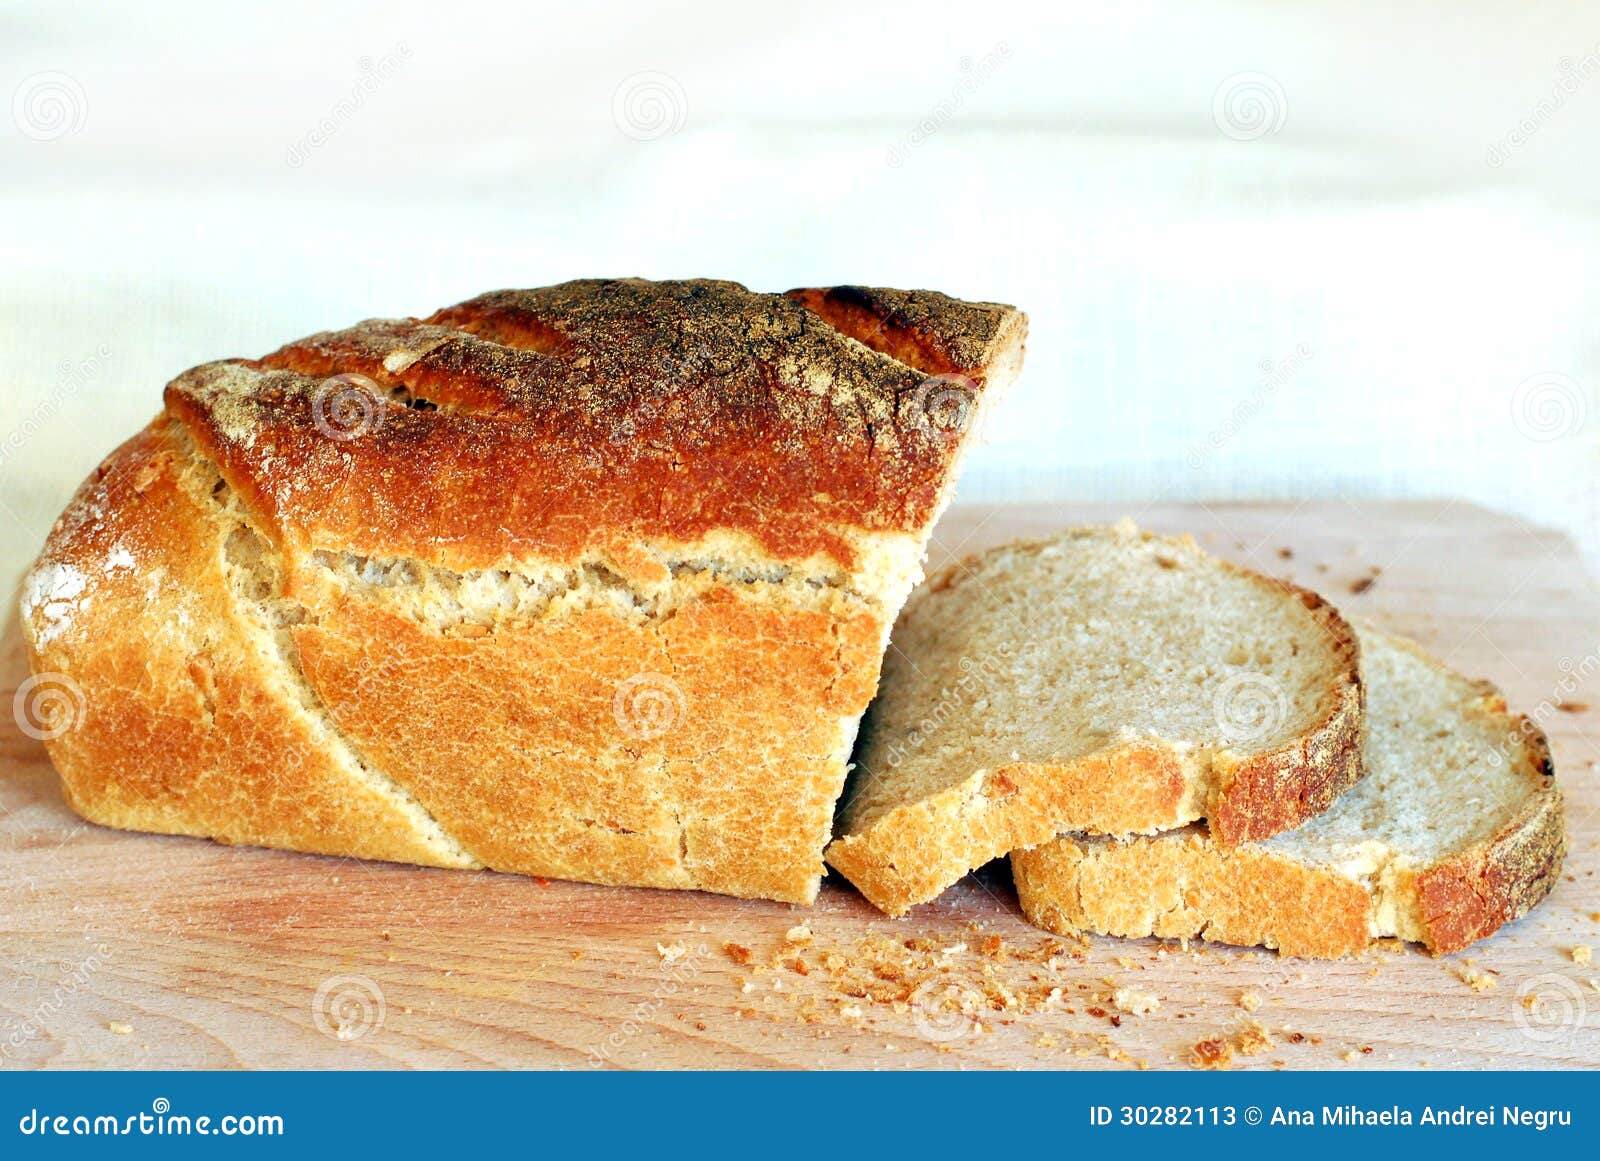 fresh slices of sourdough bread